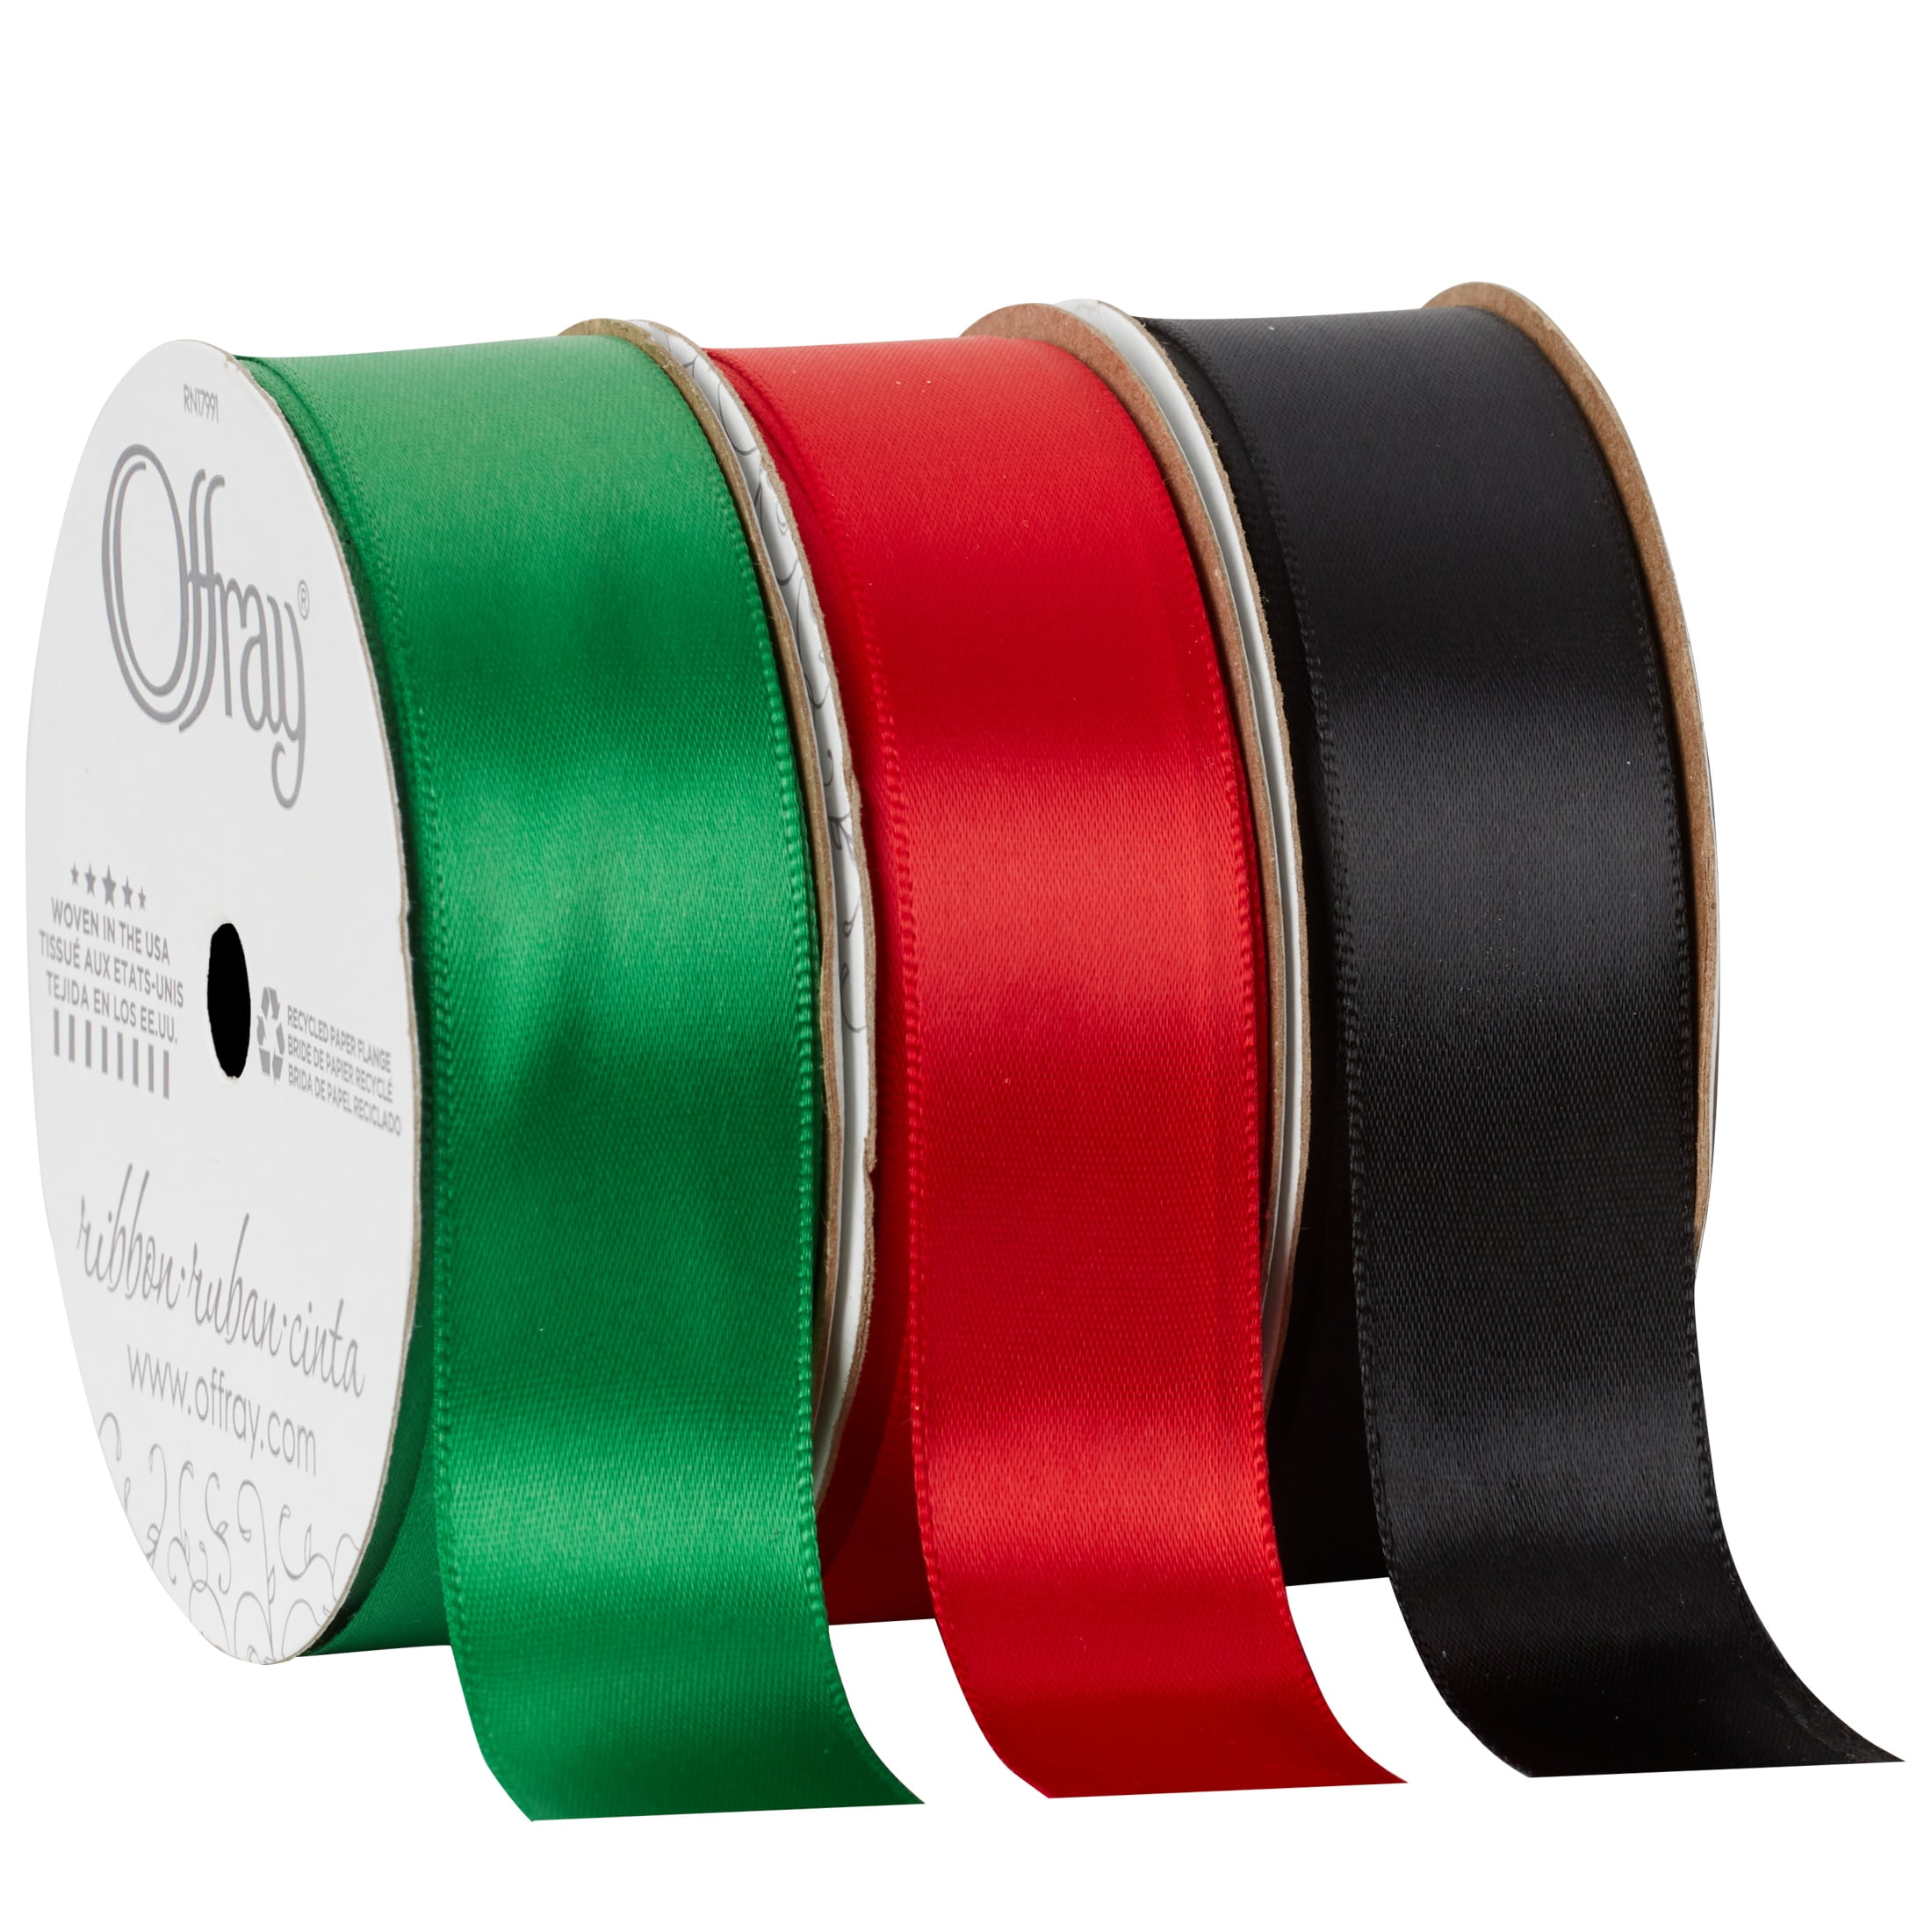 Offray Ribbon, Green 1/8 inch Tafetta Polyester Ribbon, 3 Yards